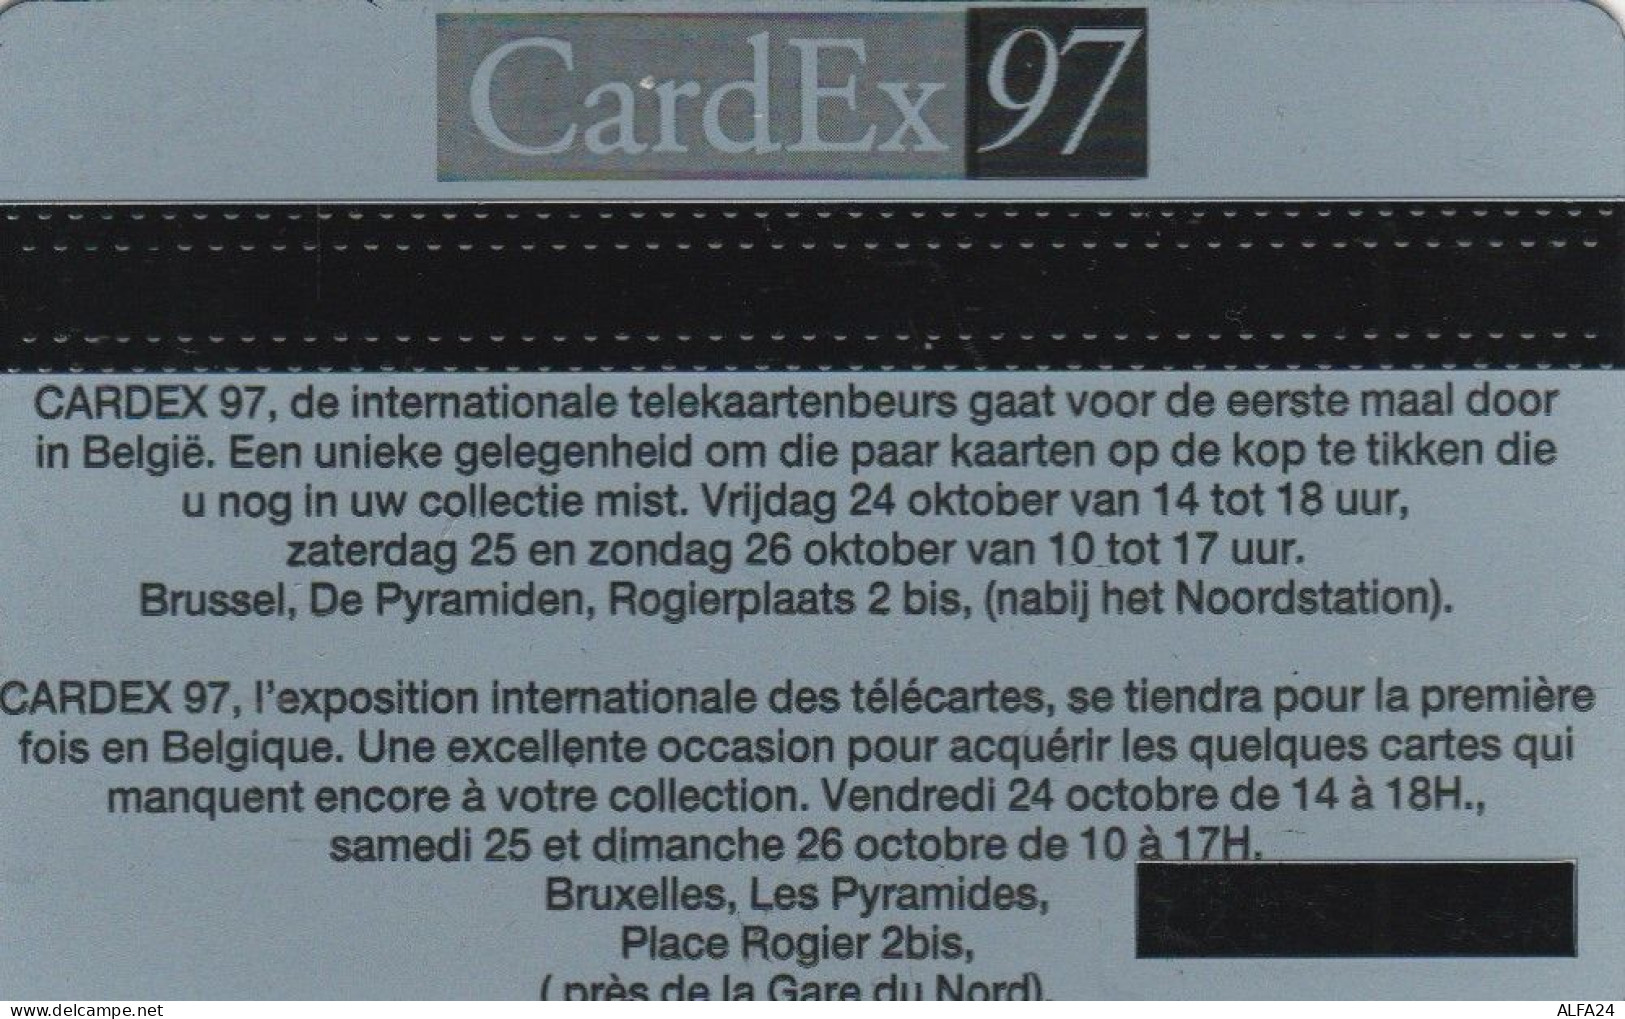 PHONE CARD BELGIO CARDEX97 (E64.7.1 - Senza Chip